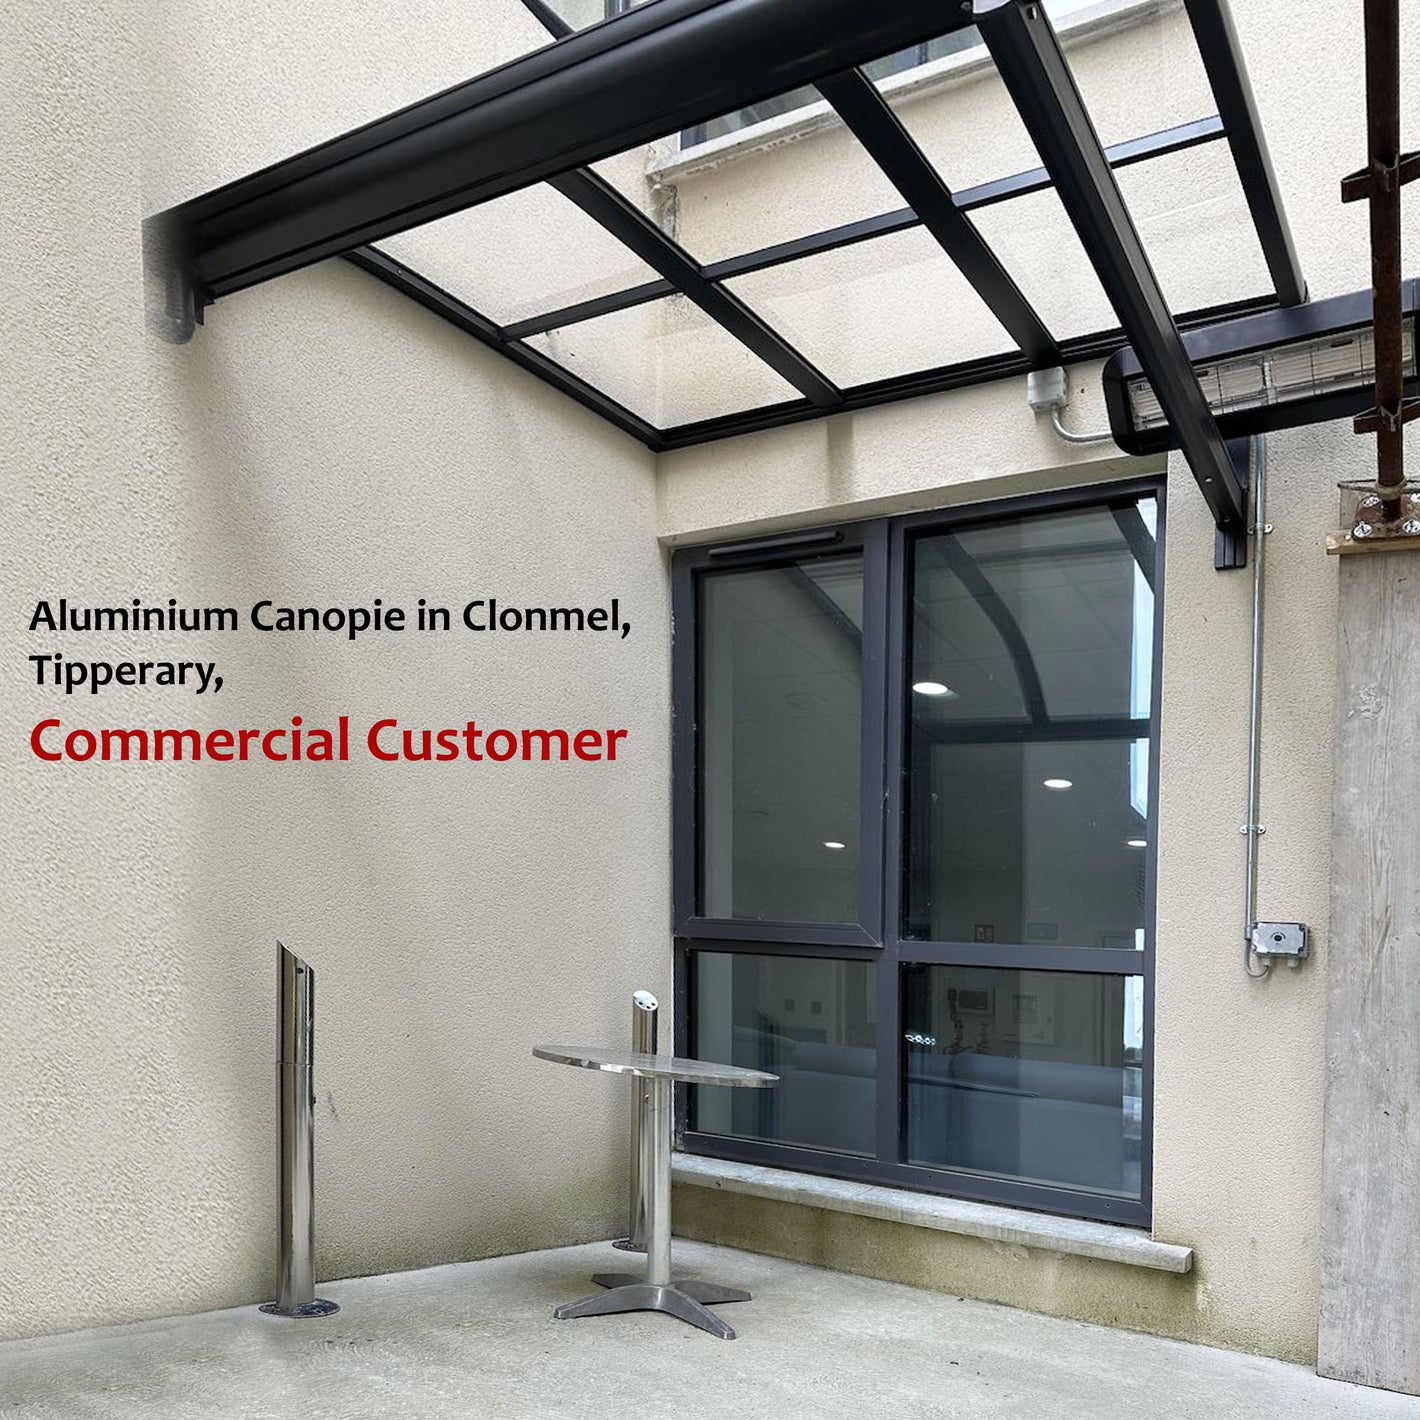 Aluminium canopy in Clonmel, Tipperary - Commercial Customer